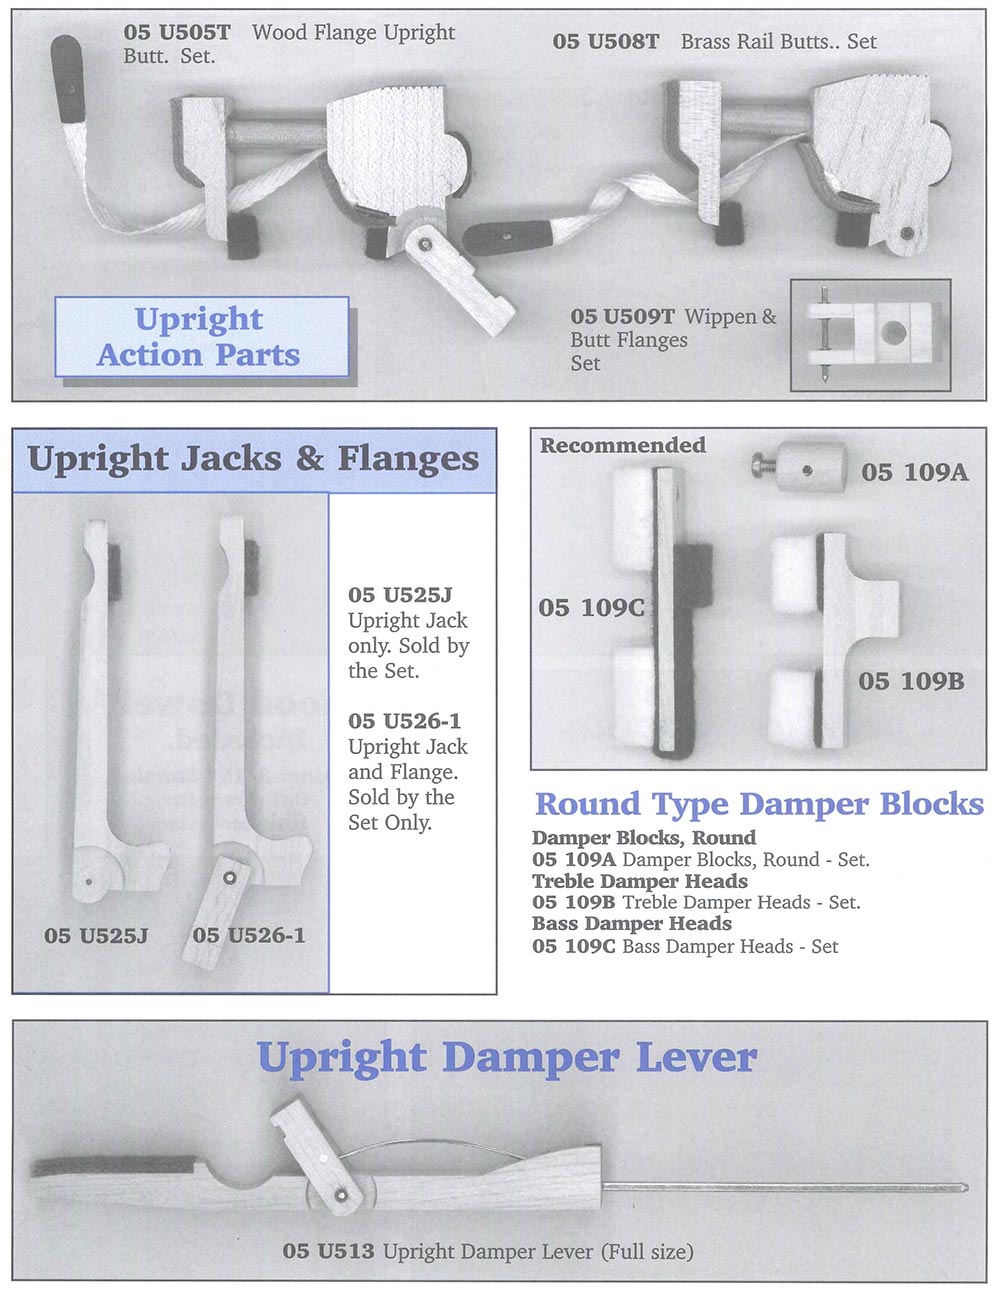 Upright Damper Lever(Full size)